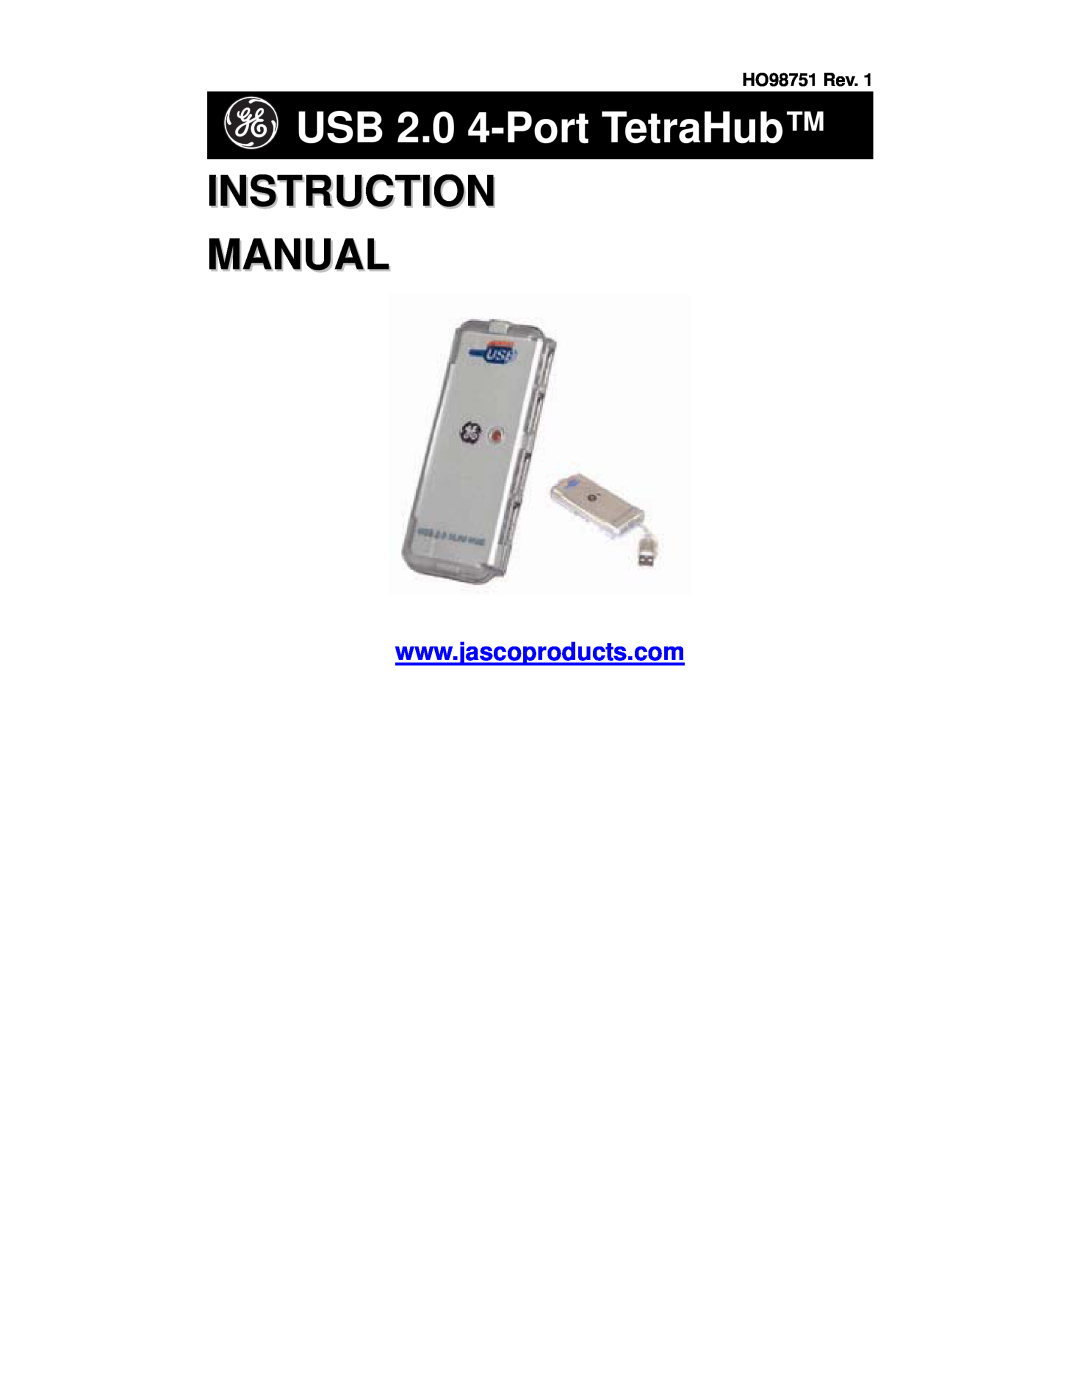 Jasco manual USB 2.0 4-Port TetraHub, Instruction Manual, HO98751 Rev 